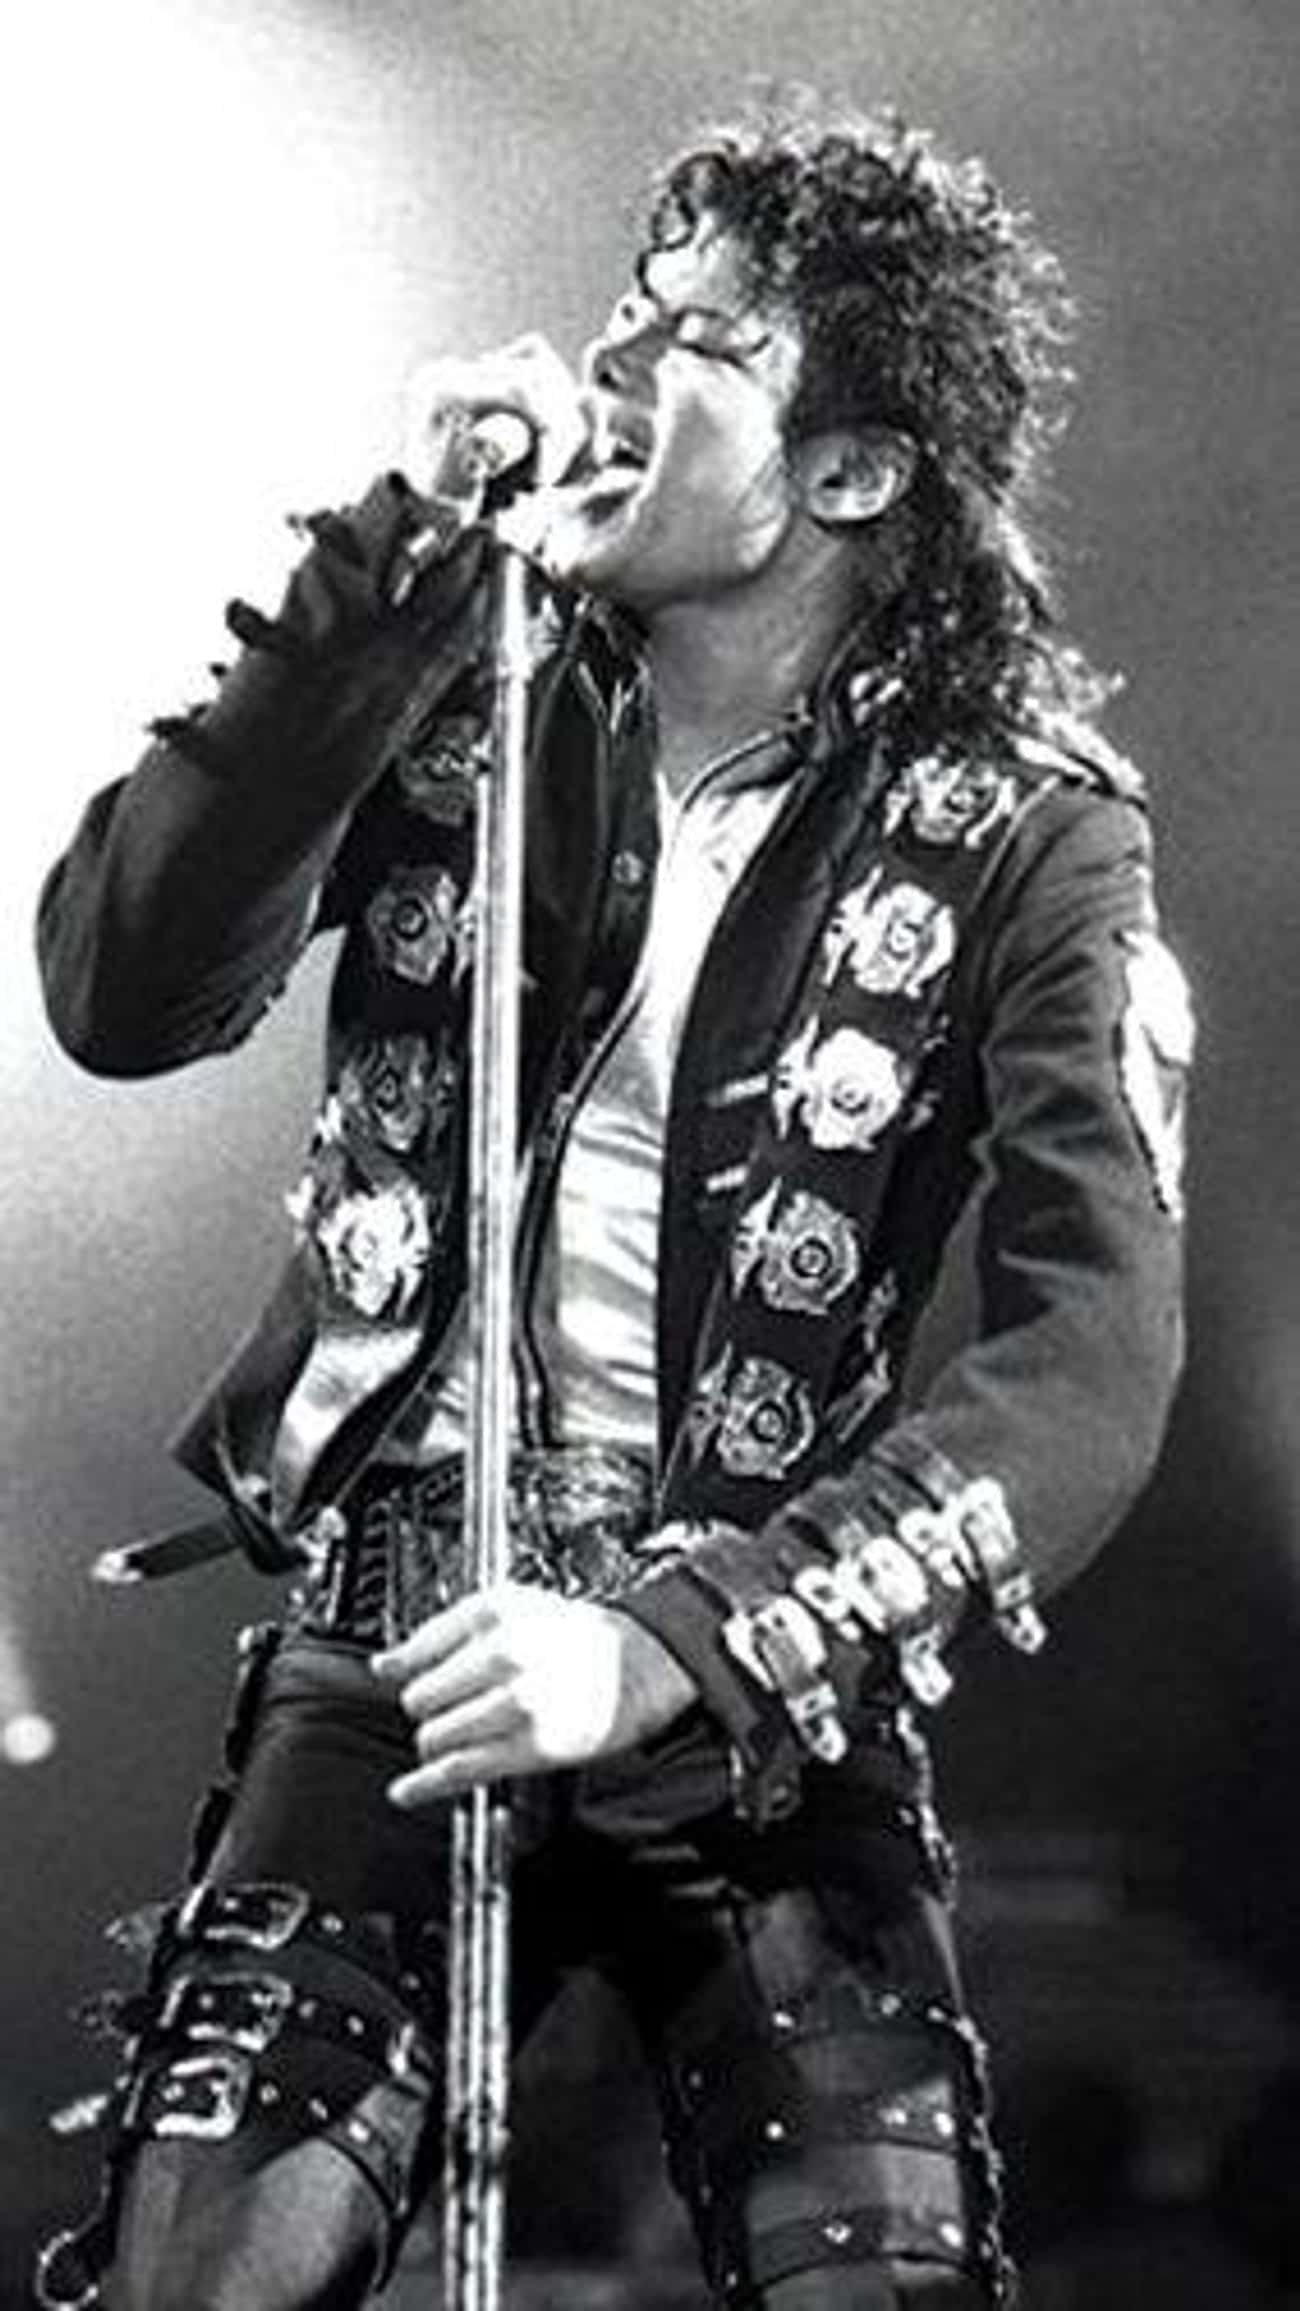 Michael Jackson - "Billie Jean"